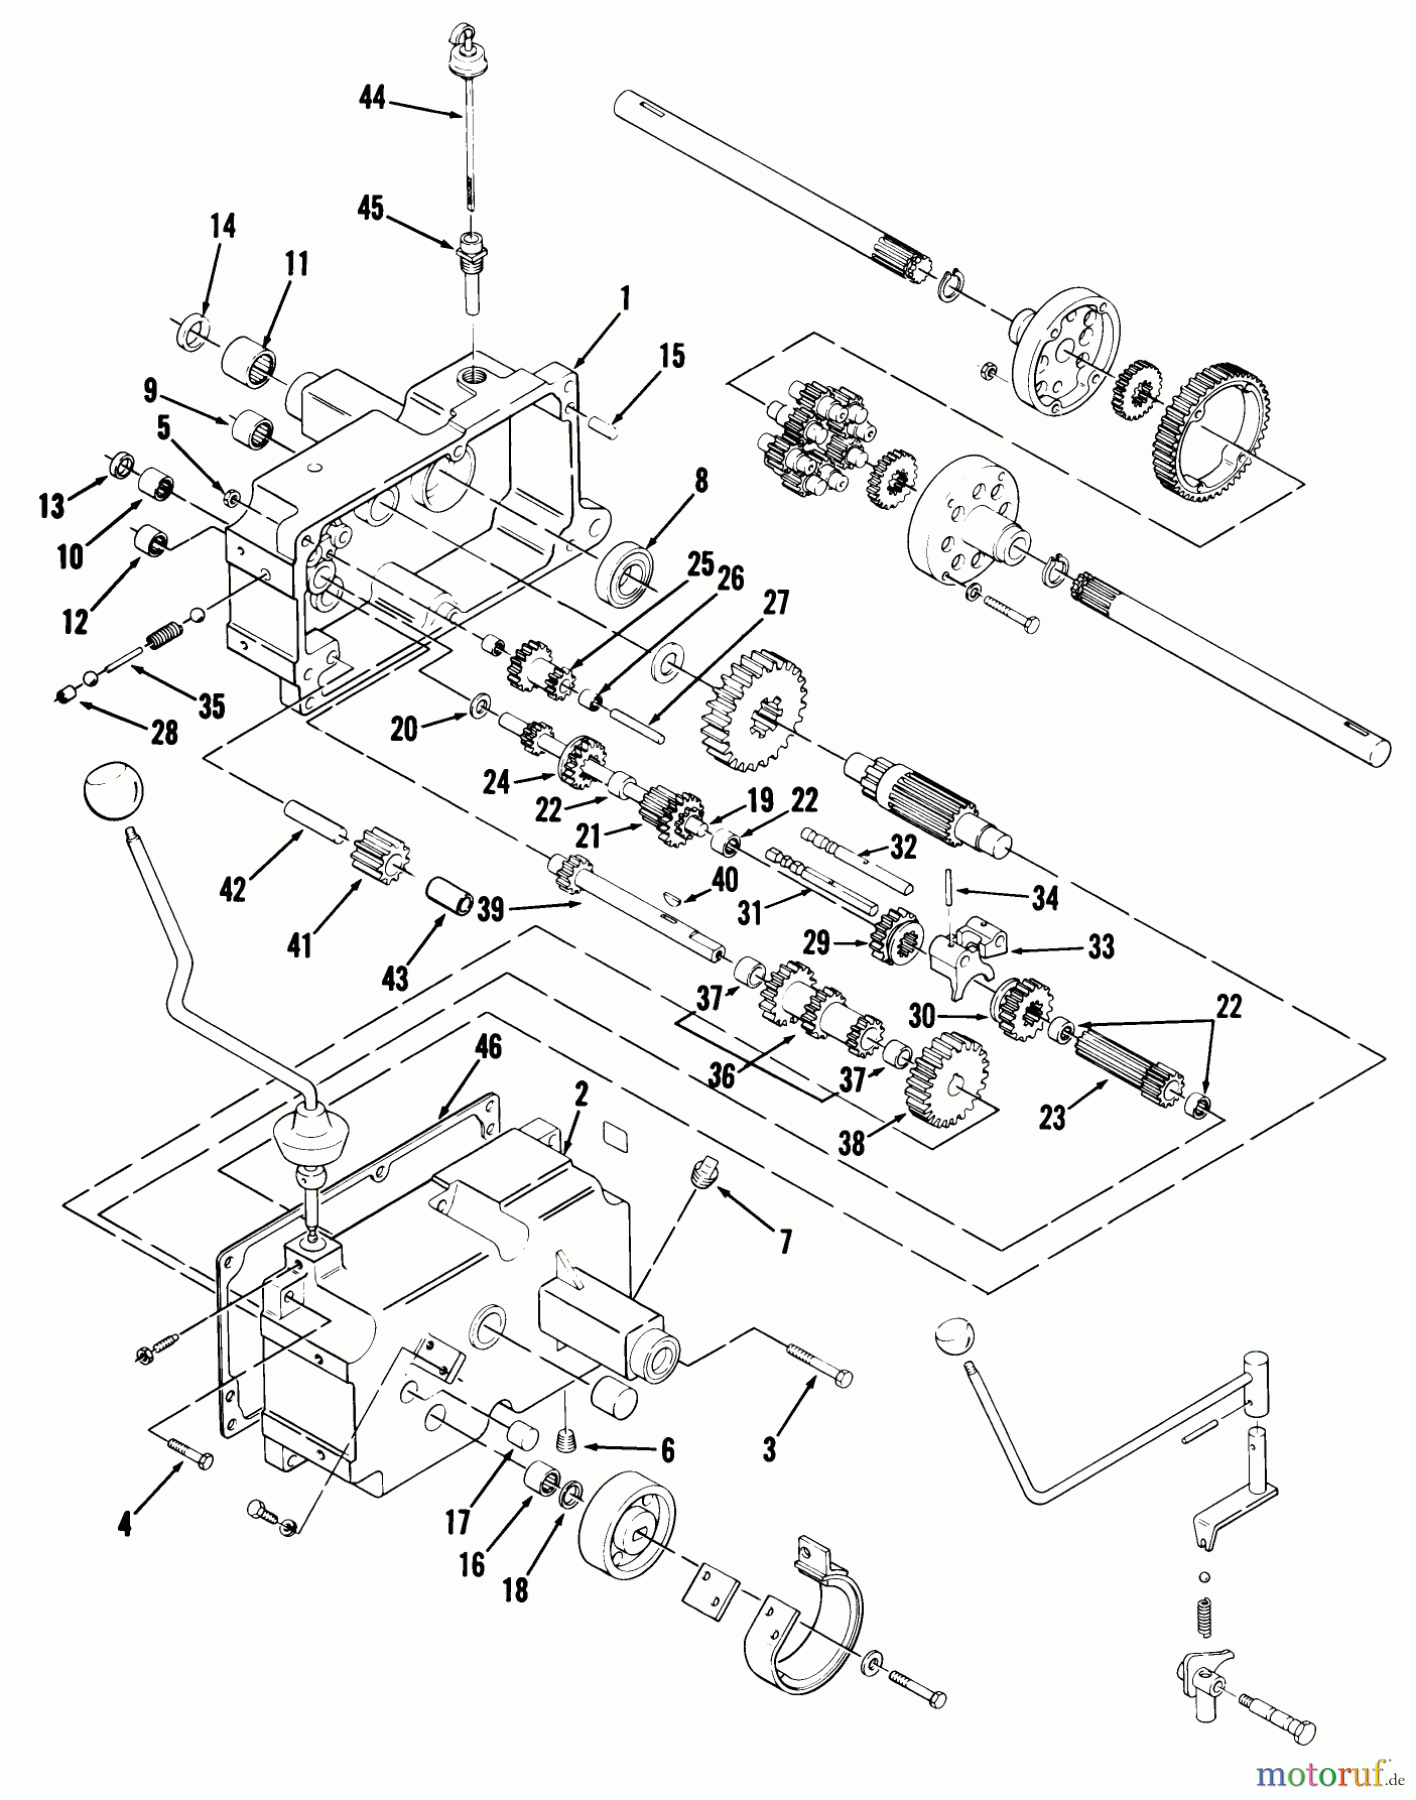  Toro Neu Mowers, Lawn & Garden Tractor Seite 1 01-12KE02 (C-125) - Toro C-125 Automatic Tractor, 1981 MECHANICAL TRANSMISSION-8 SPEED #1